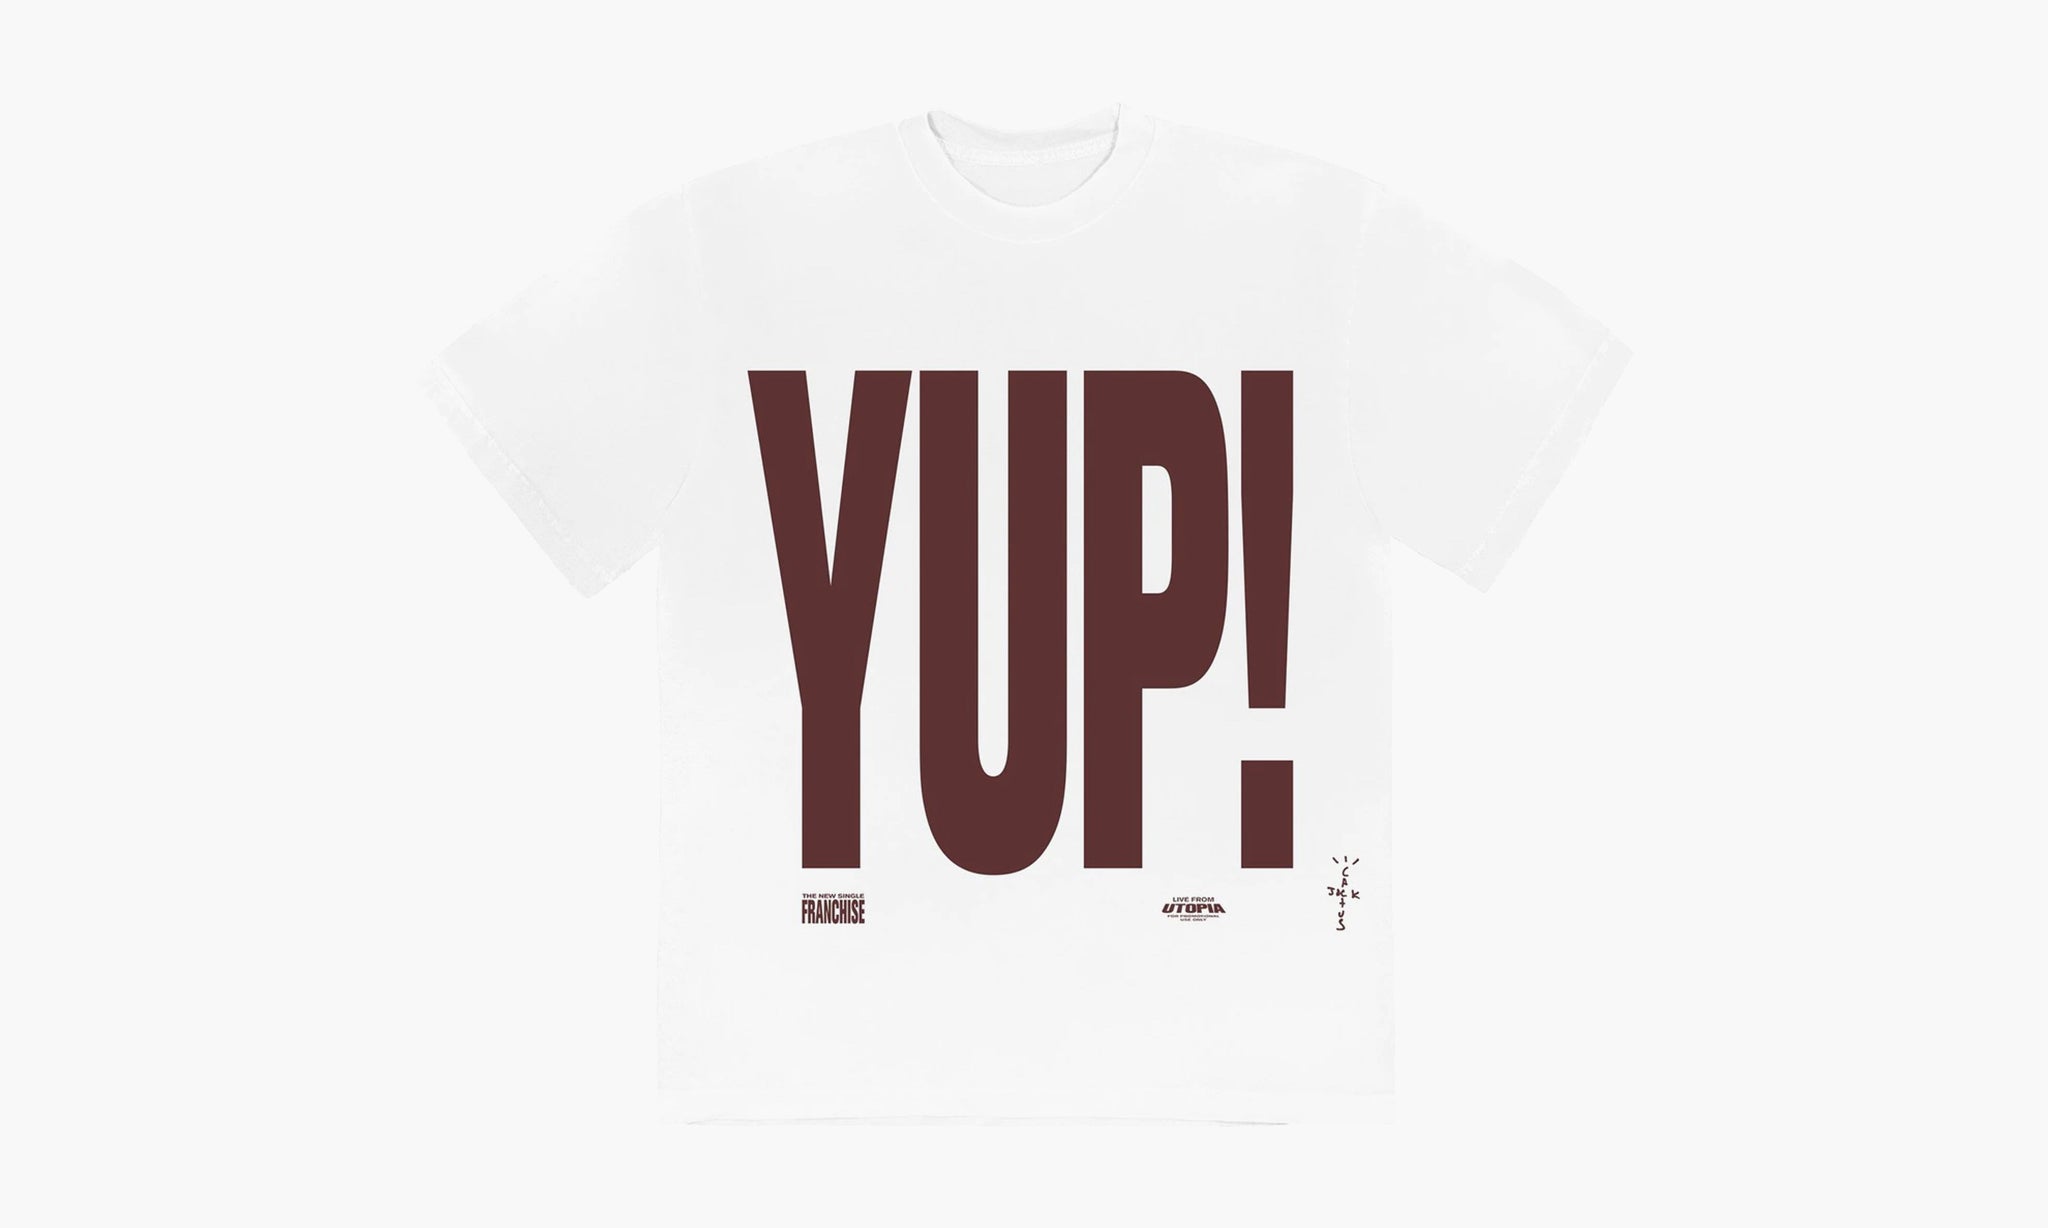 Travis Scott Franchise Promo YUP! T-shirt White